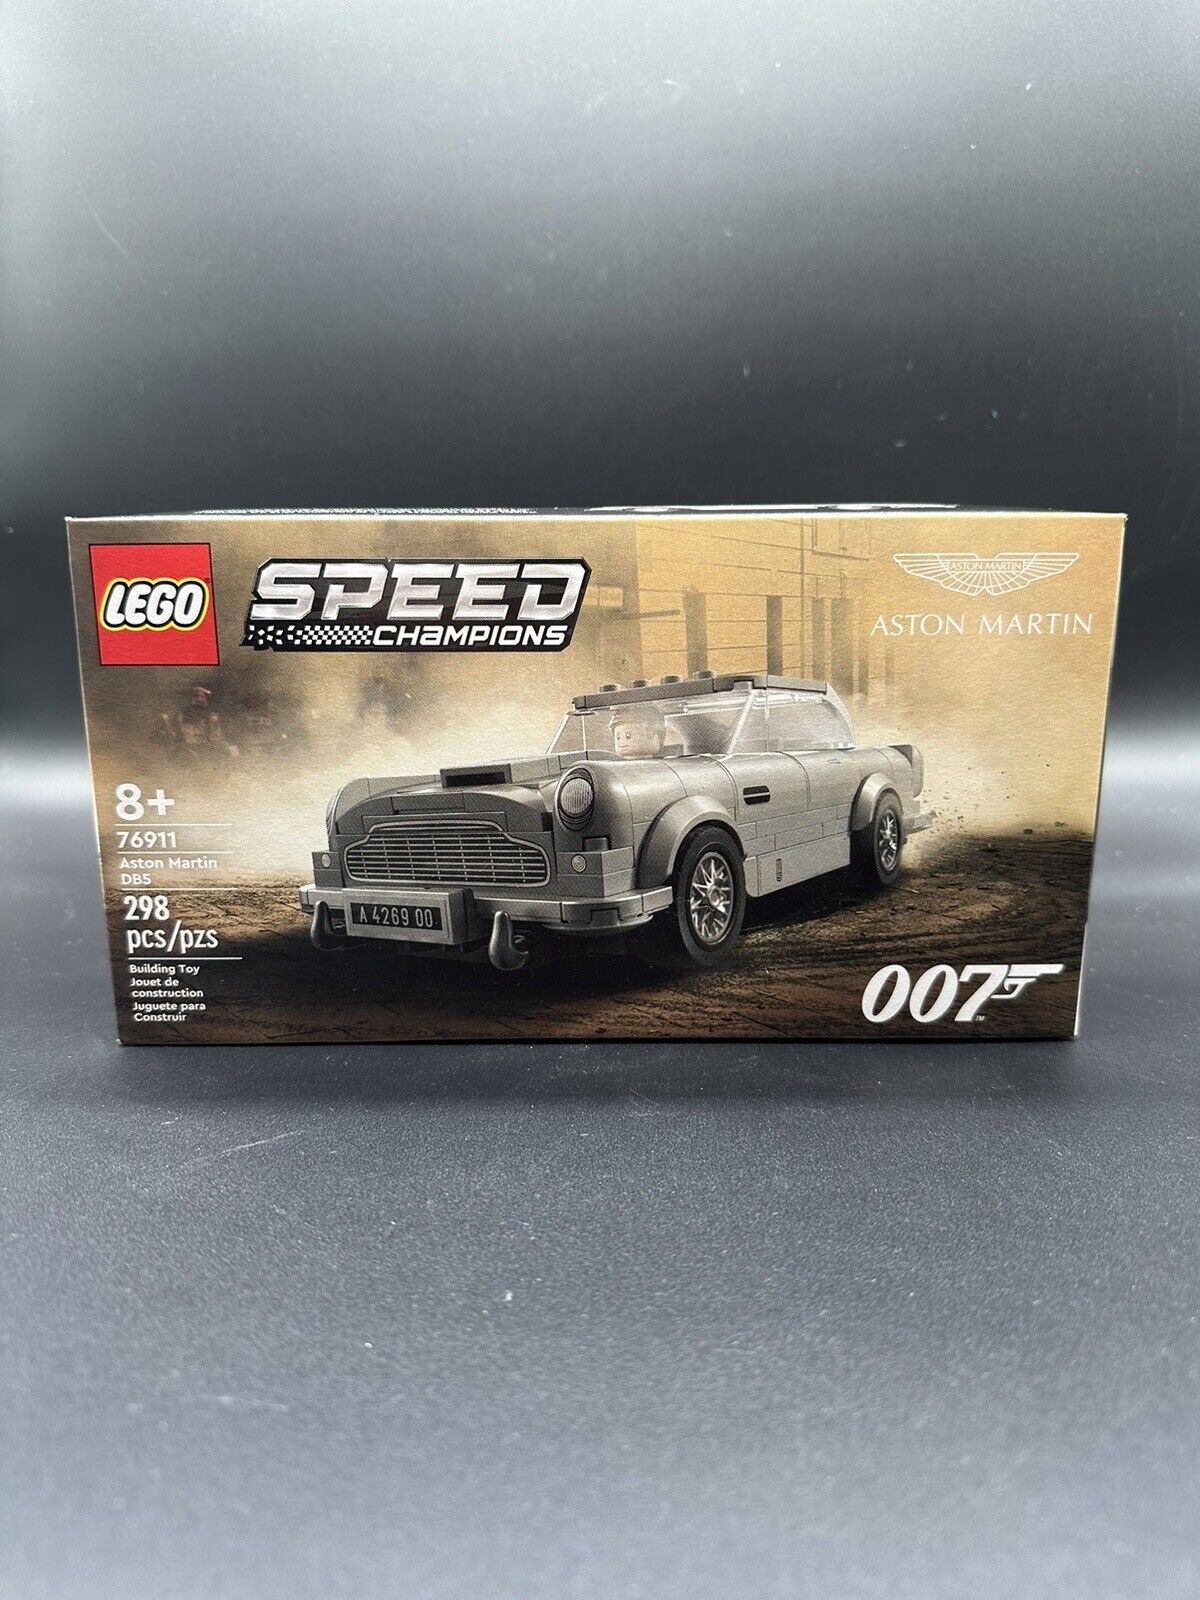 Lego Speed Champions 007 Aston Martin DB5 76911 Toy Building Set - 298 Pieces